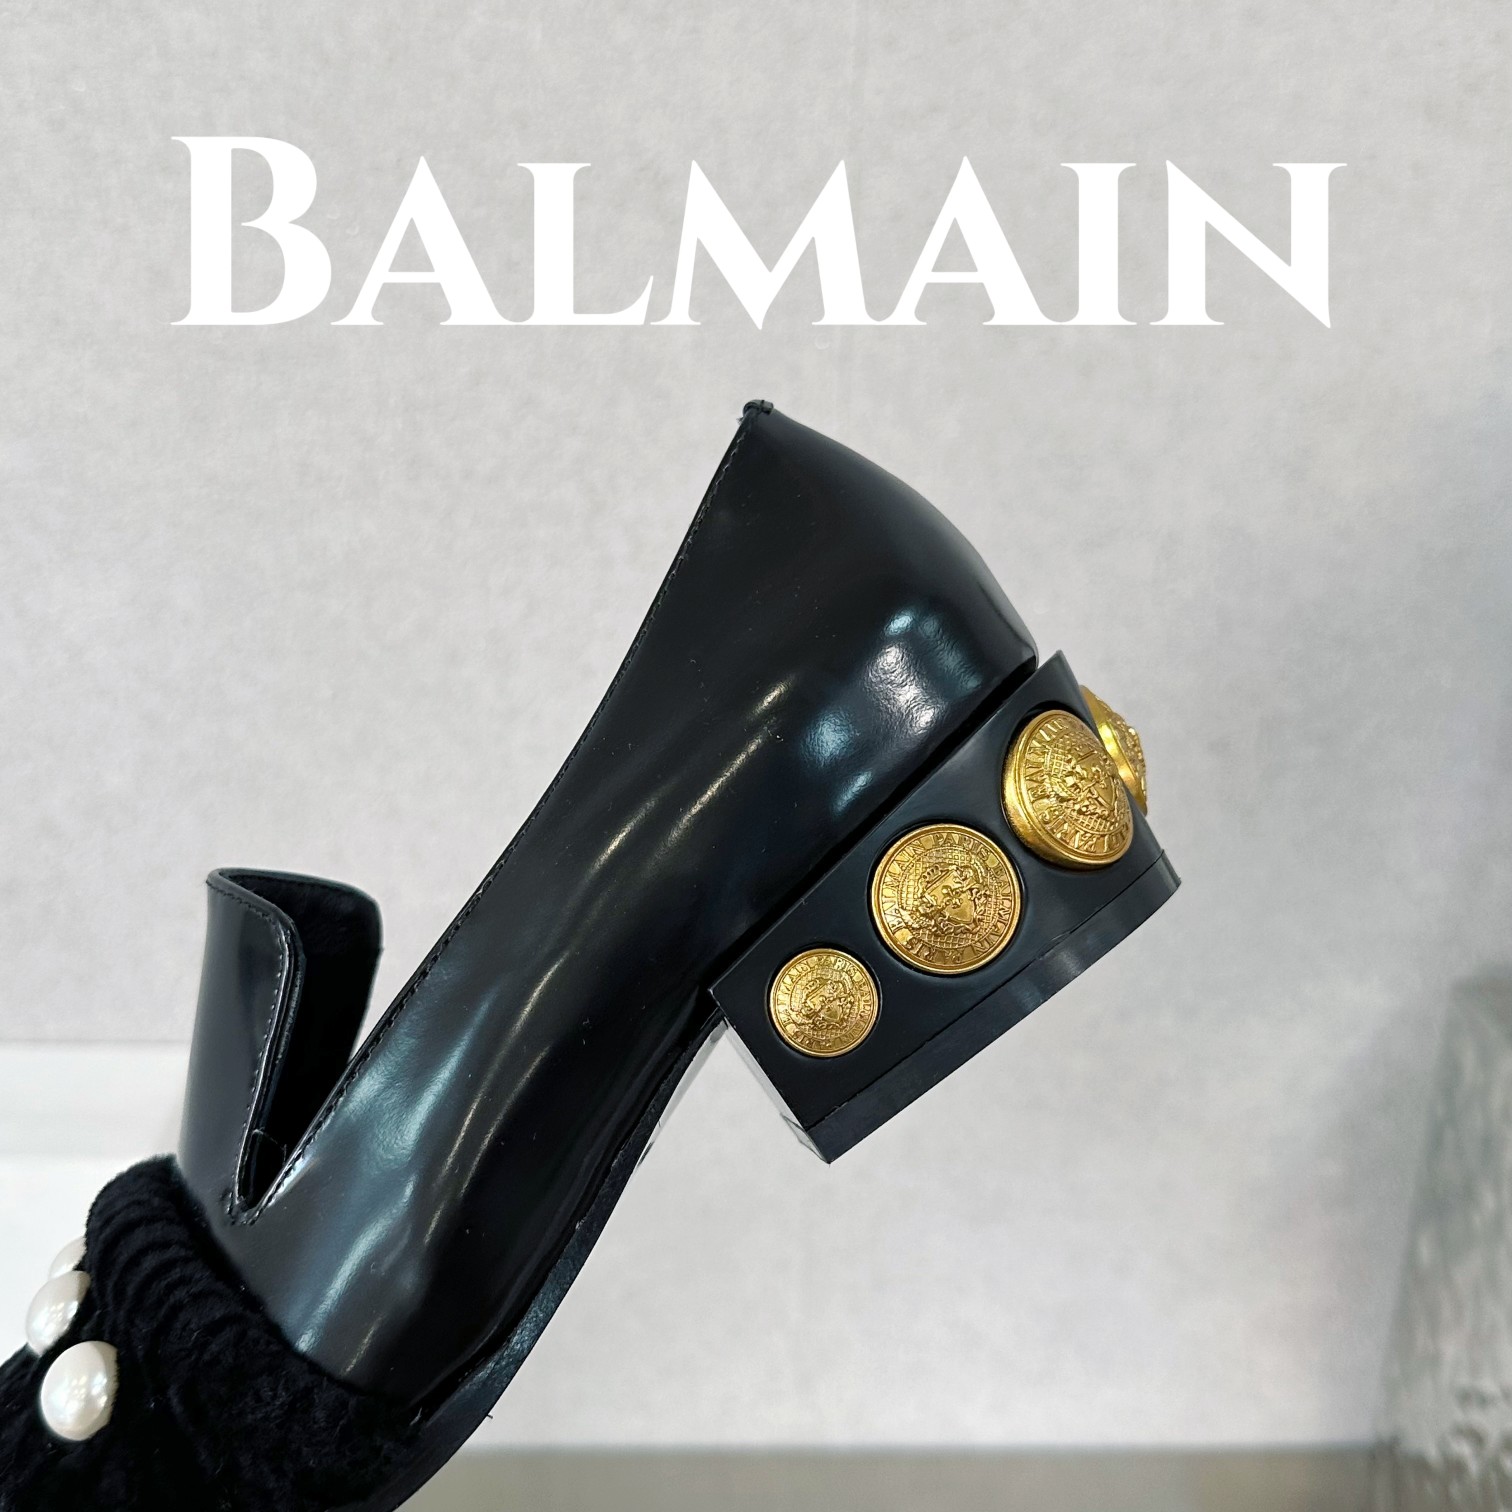 Balmain巴尔曼巴尔曼硬币羔羊毛珍珠单鞋此款黑色皮革方跟金色硬币镶片尖头会标图案海外订购原版1:1完